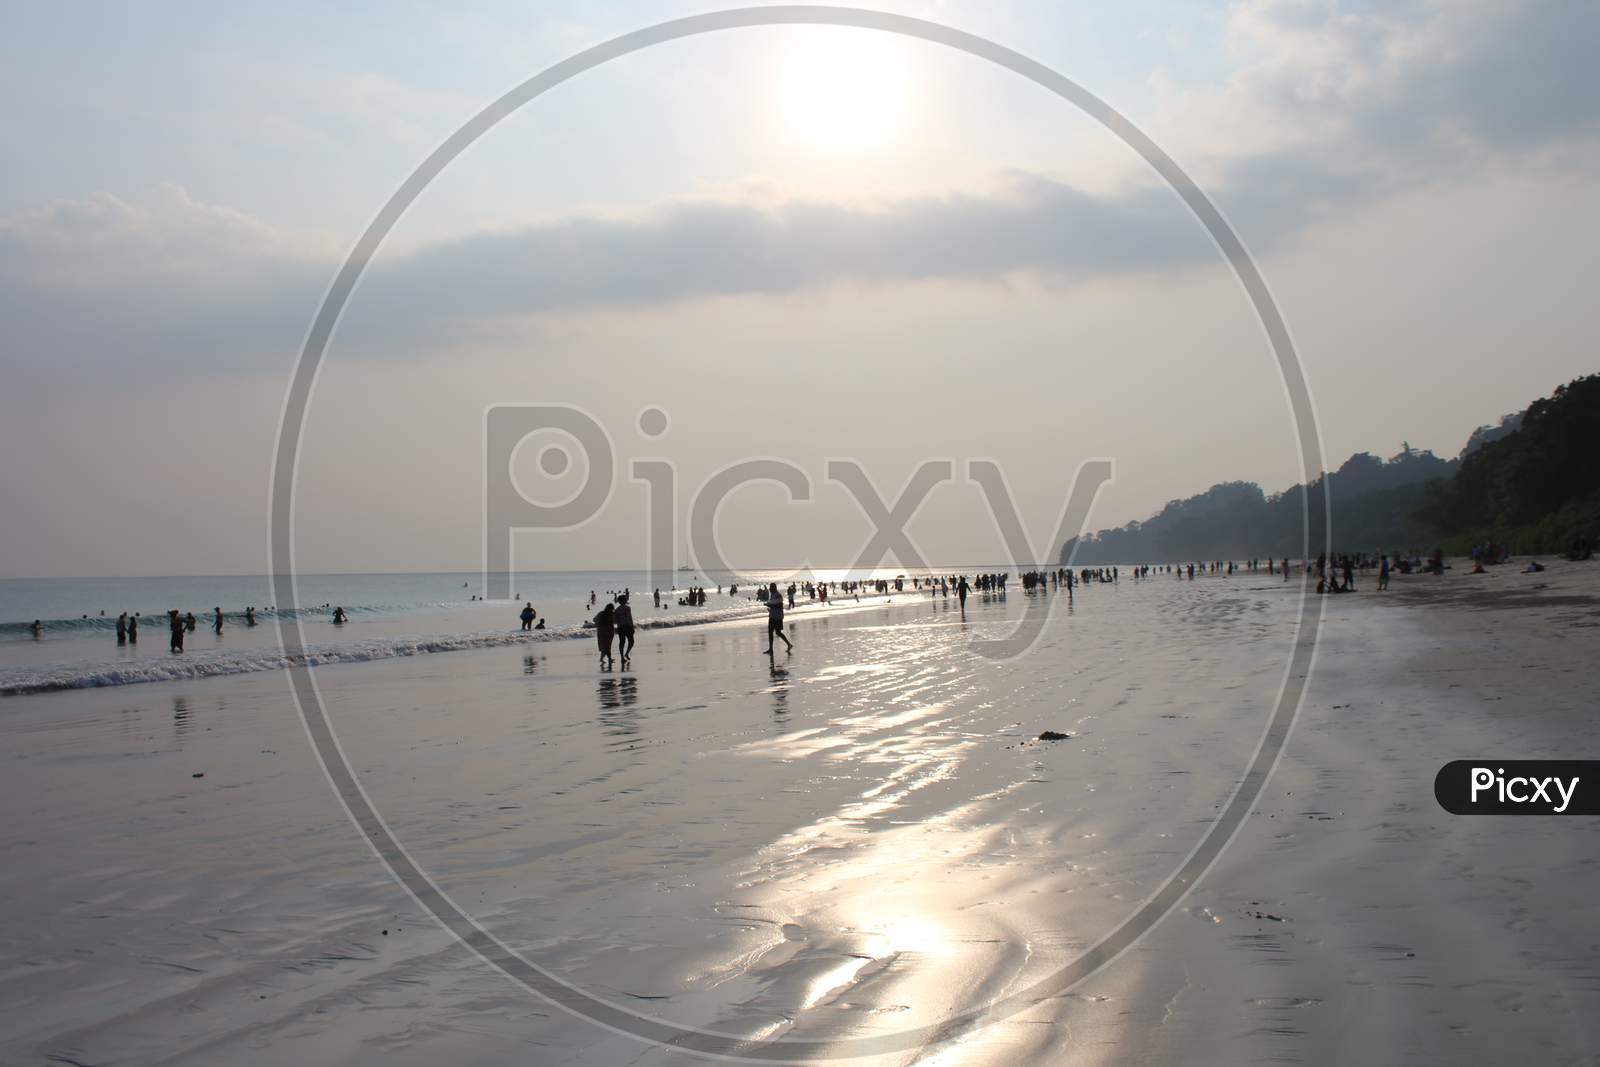 tourist having fun time at Radhanagar Beach, Havelock Island